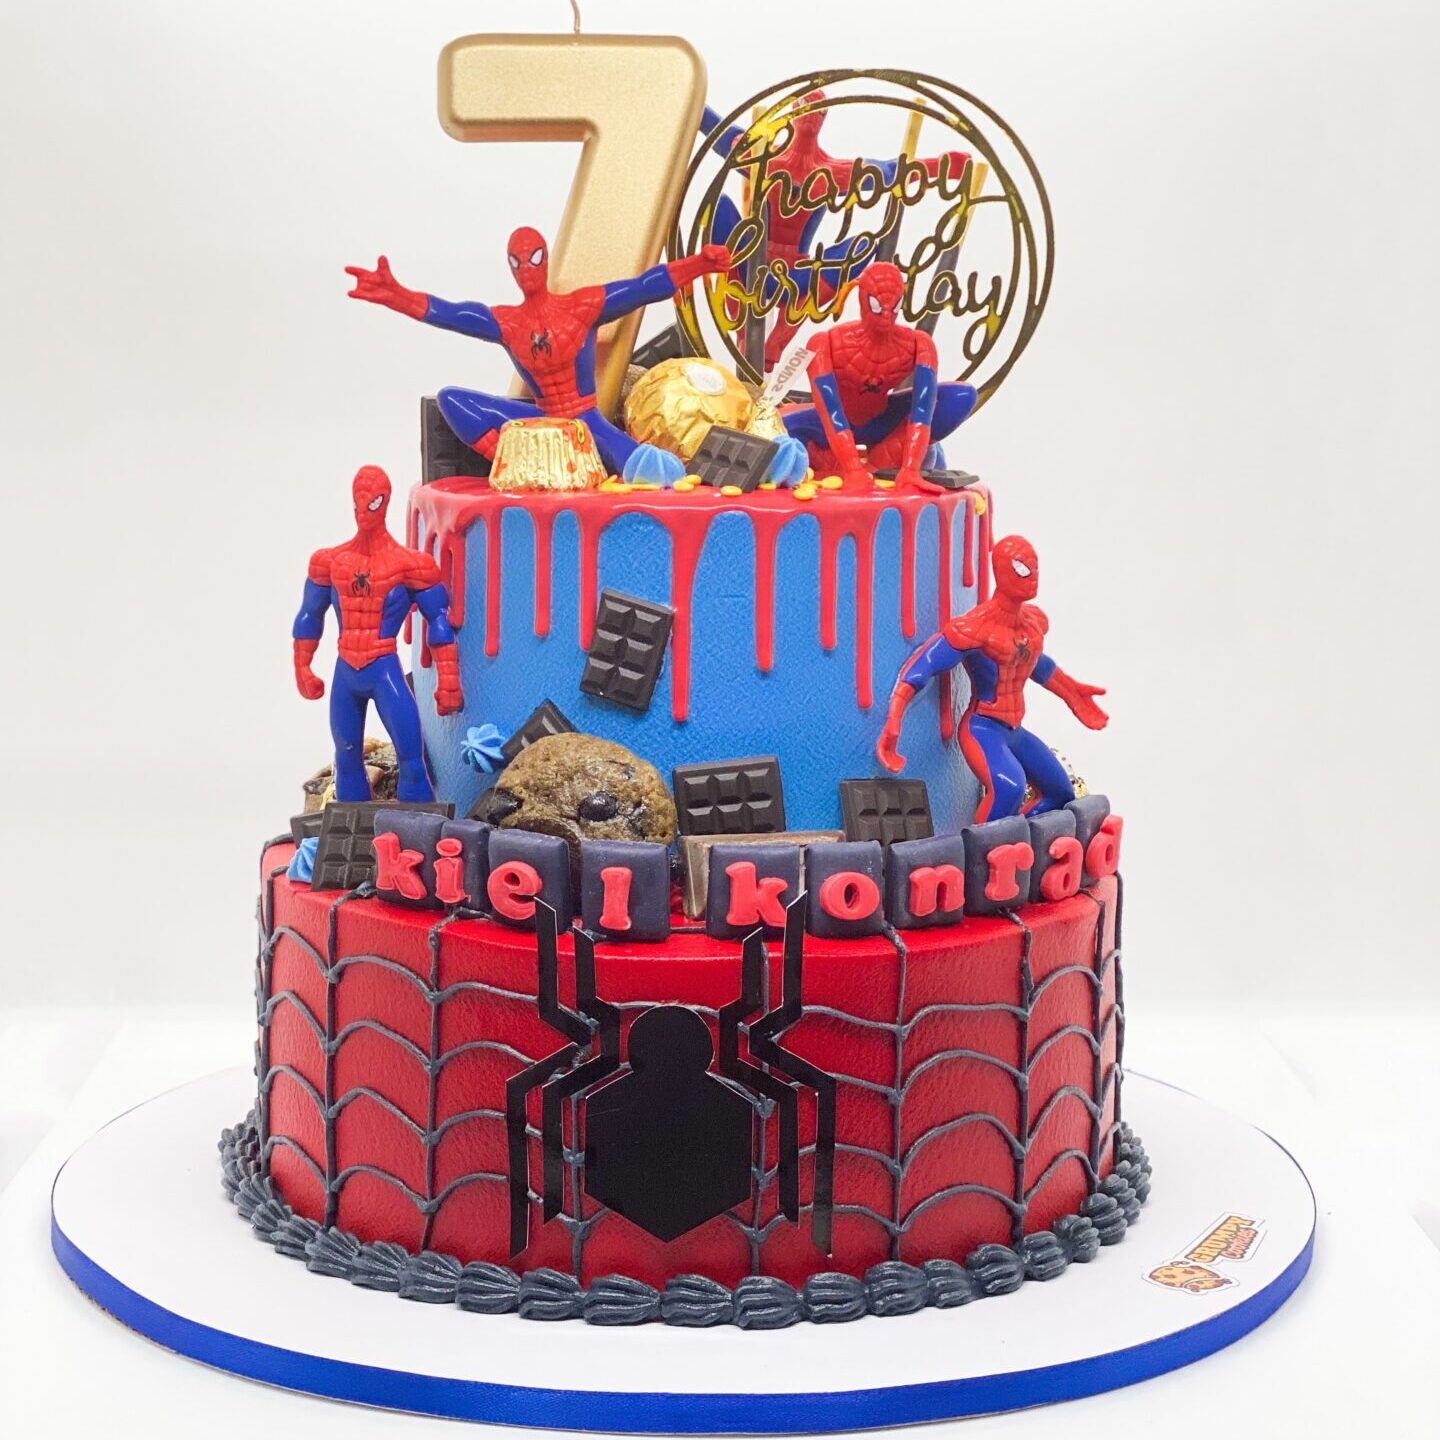 Spiderman theme cake - Decorated Cake by spongy treats - CakesDecor